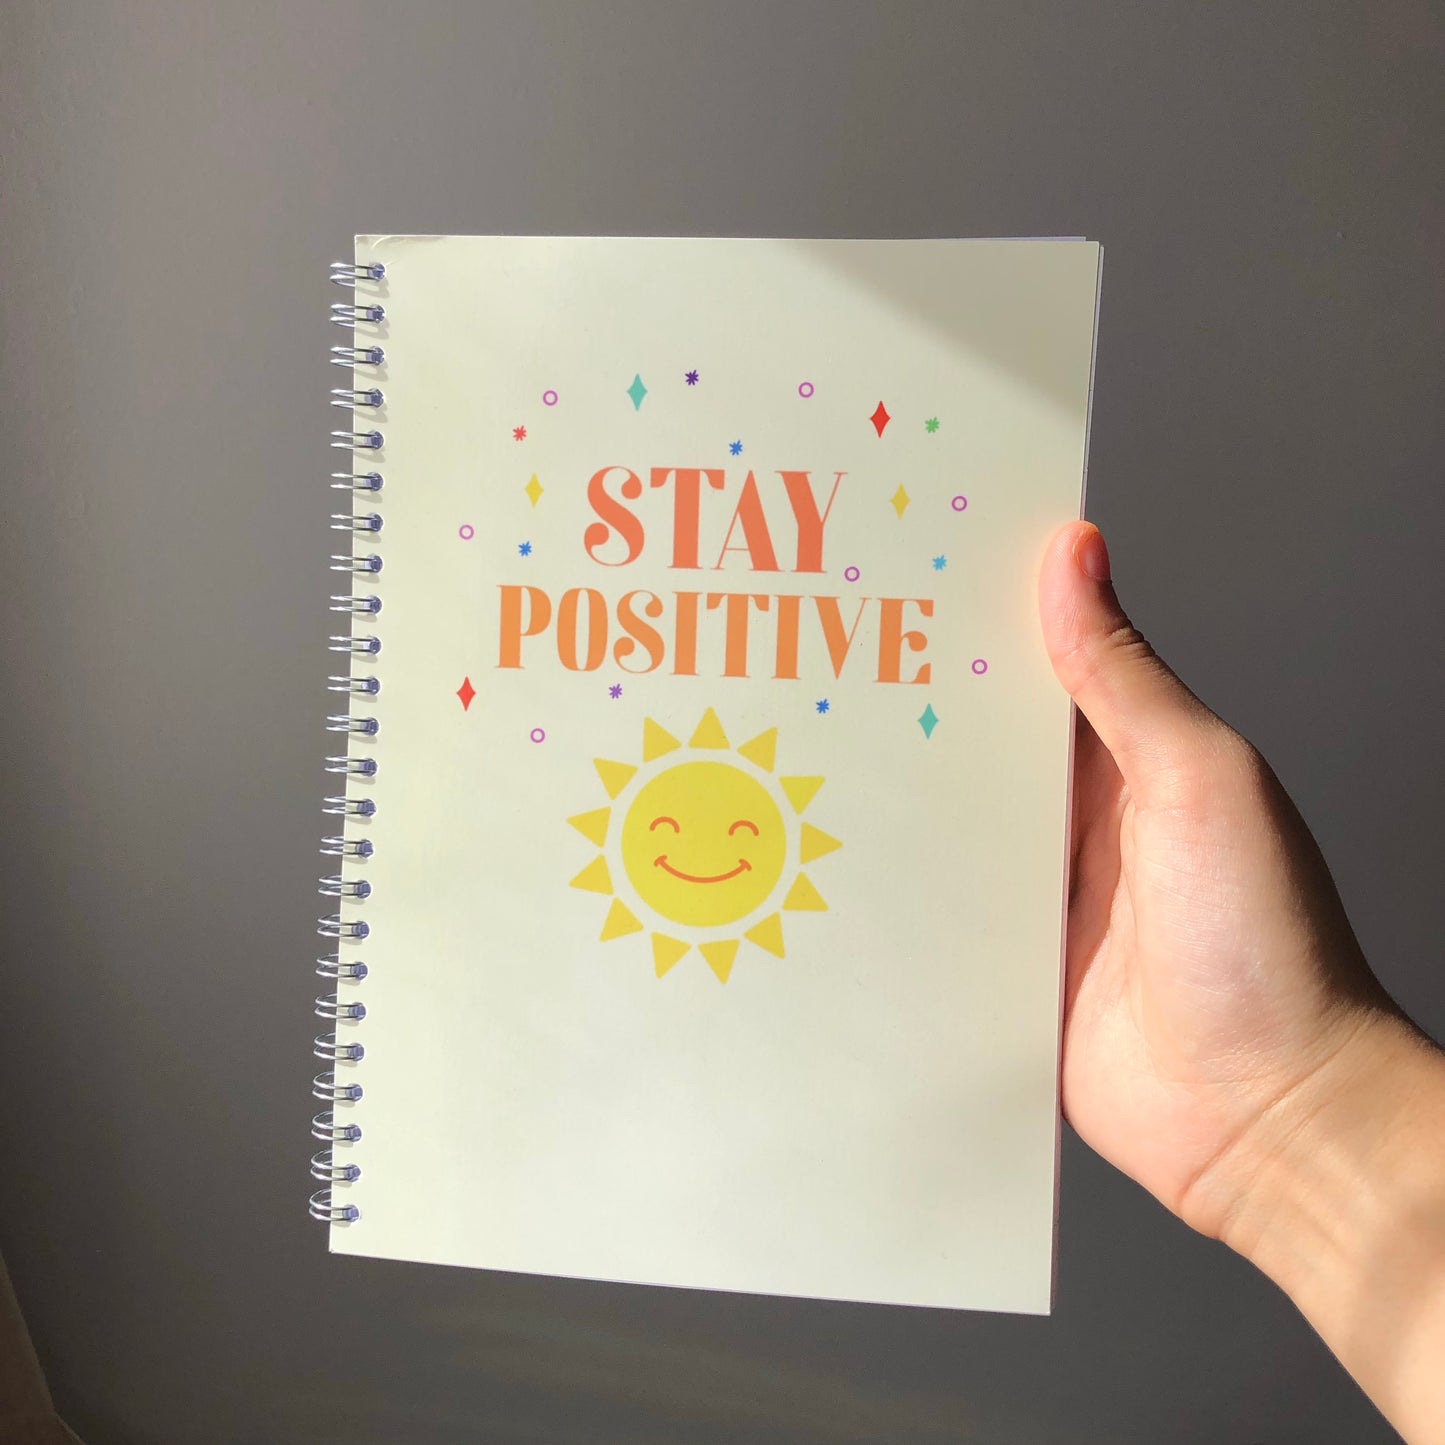 Stay positive notebook